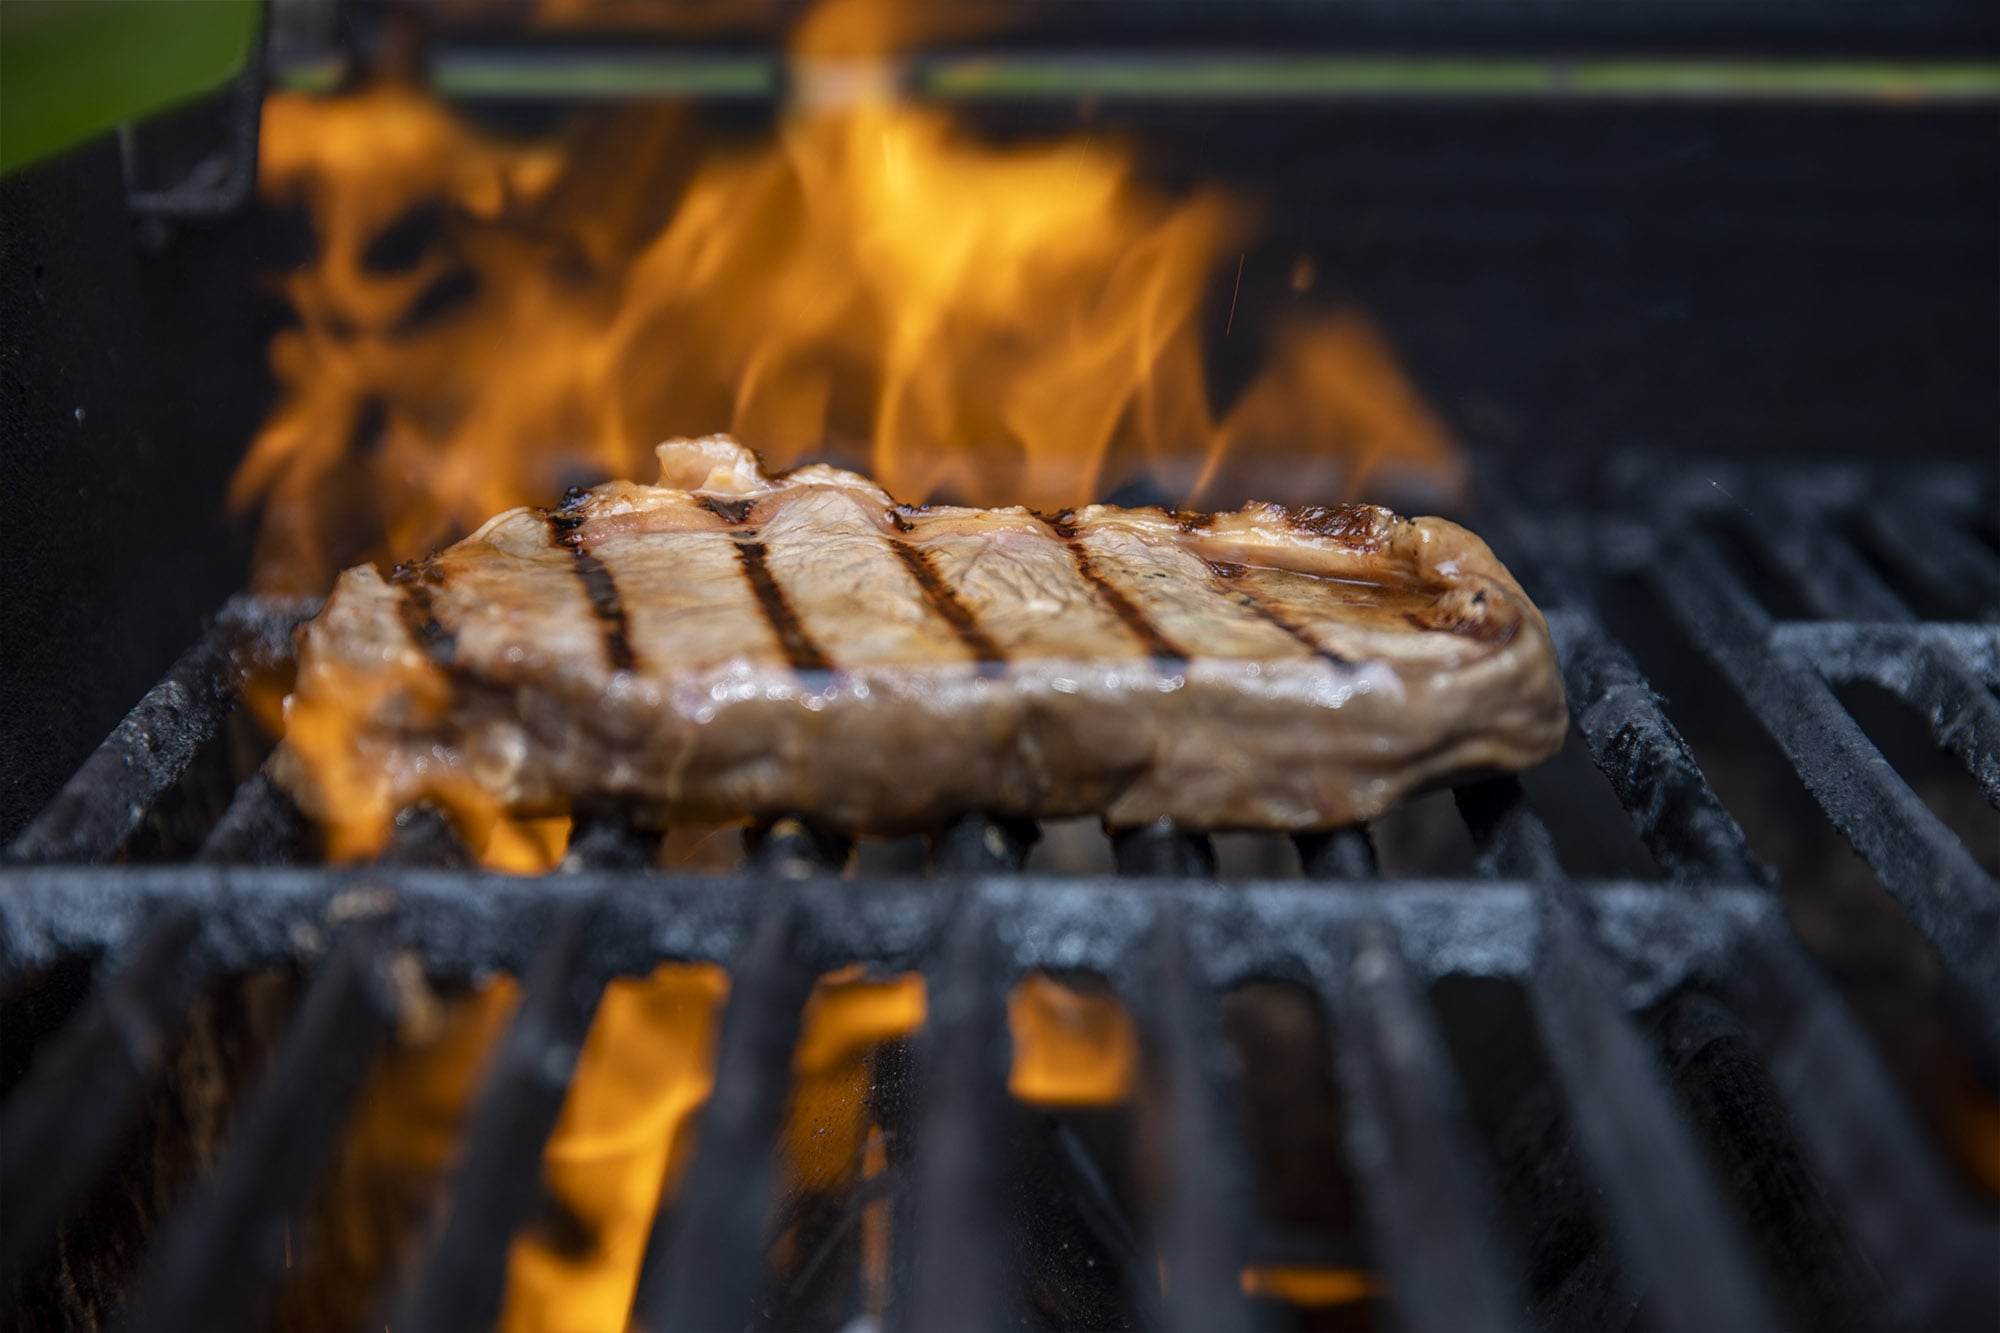 Online Grillkurs: Steak grillen@Home